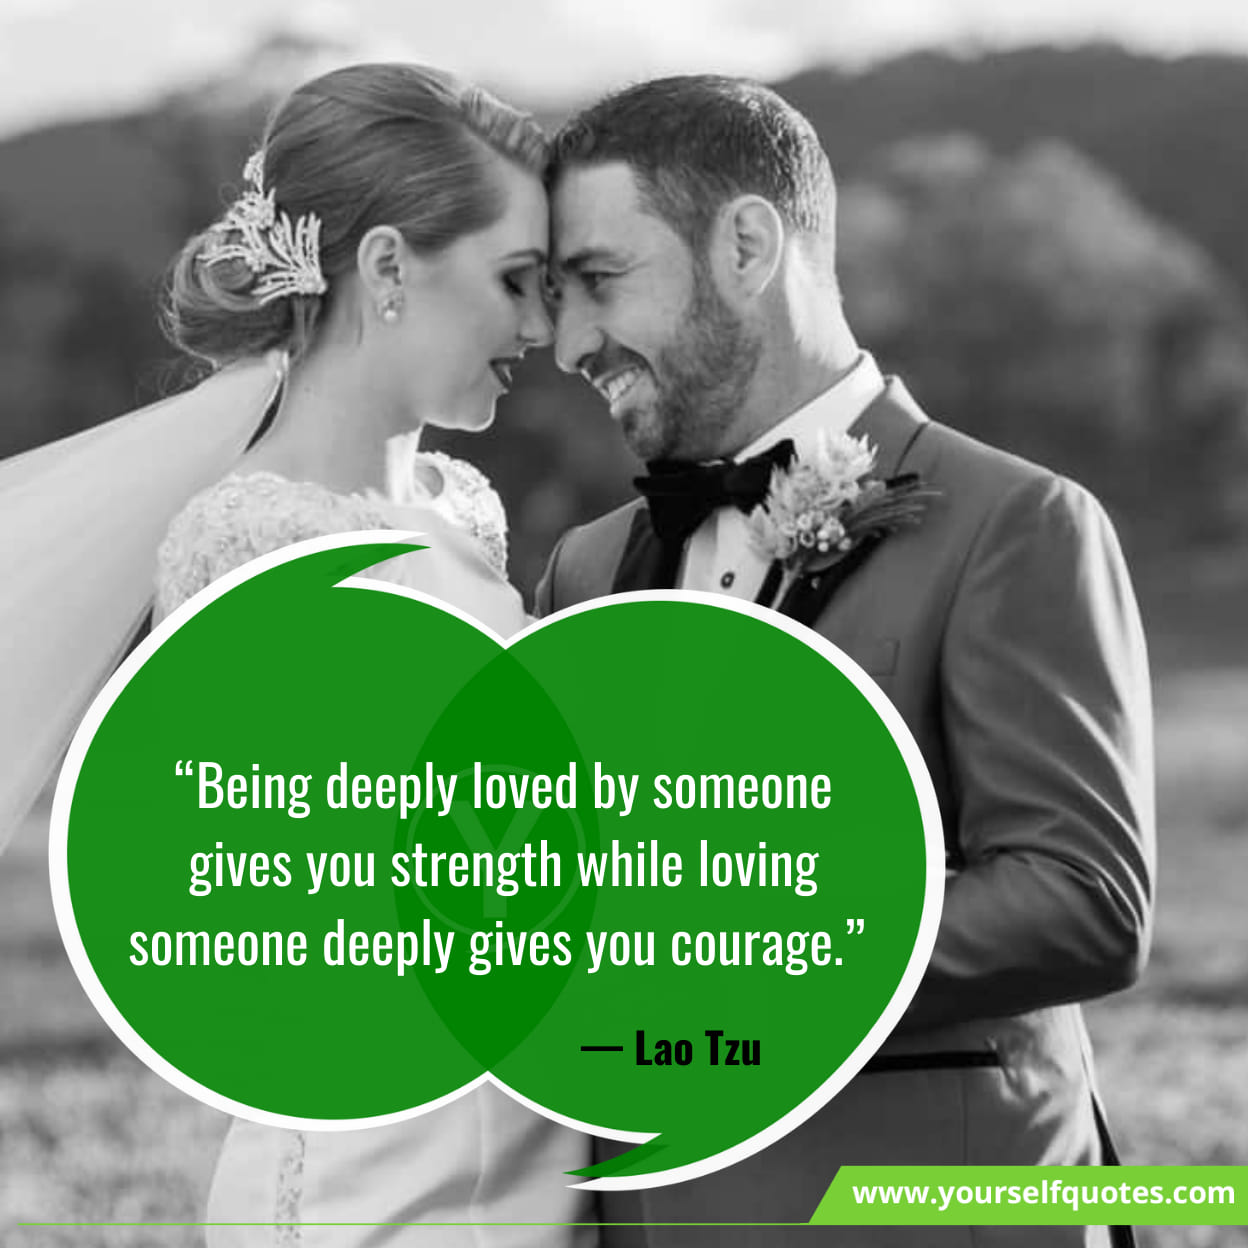 Inspiring Wedding Quotes